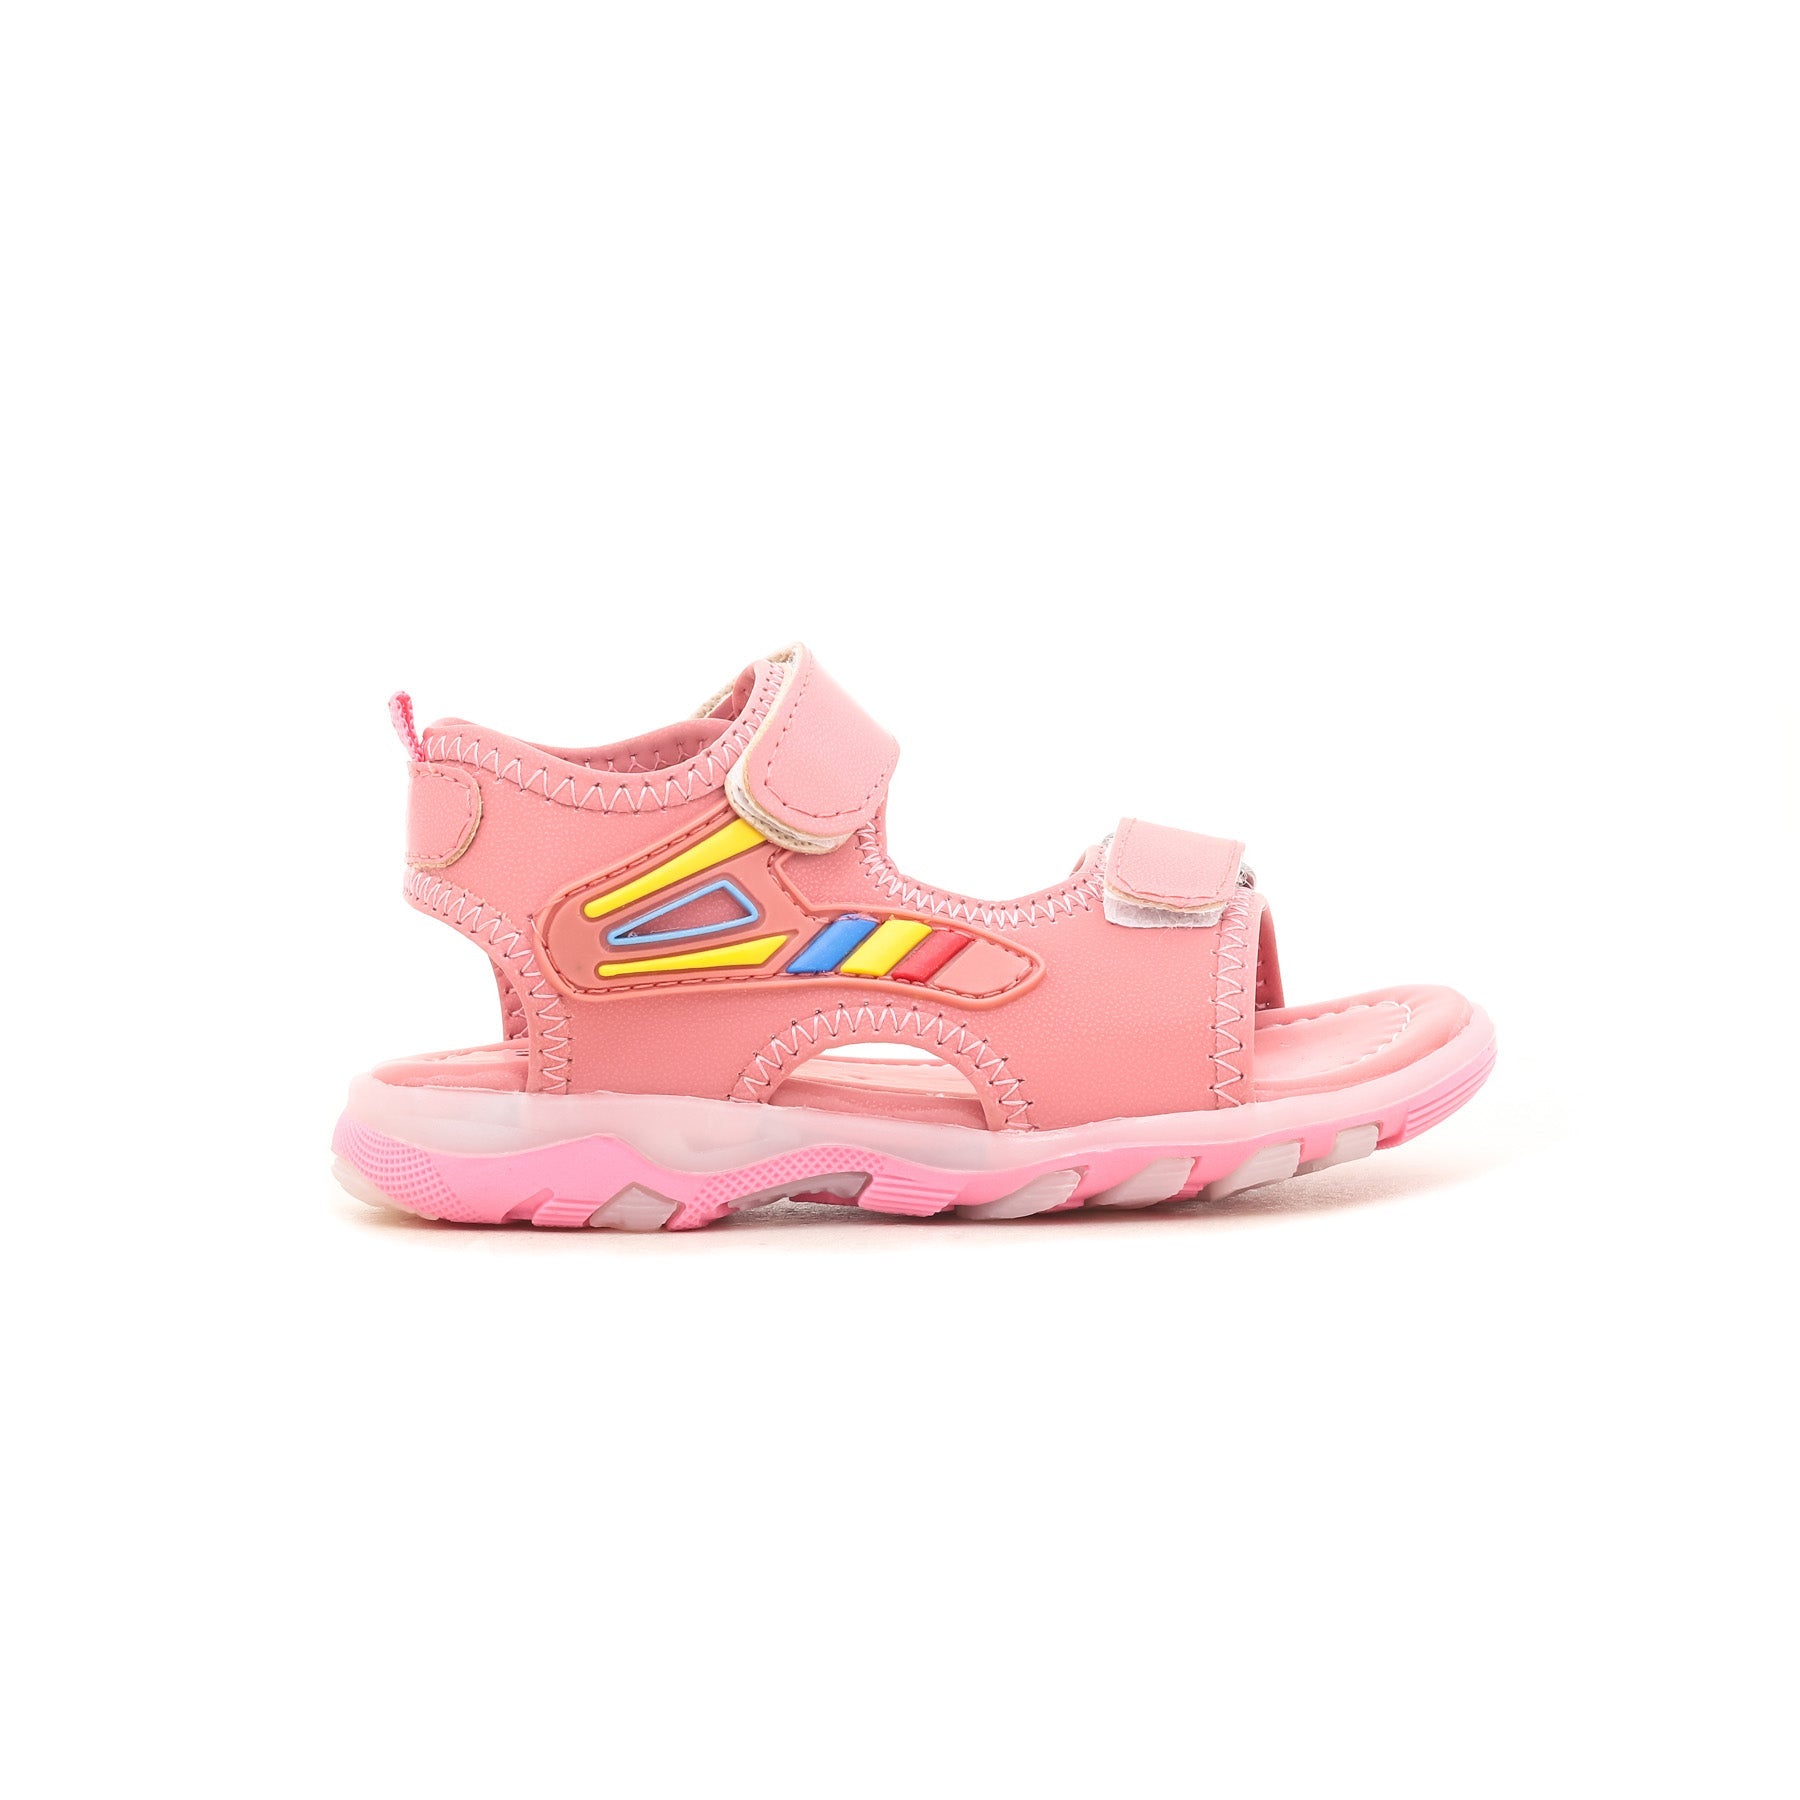 Girls Pink Casual Sandal KD7561